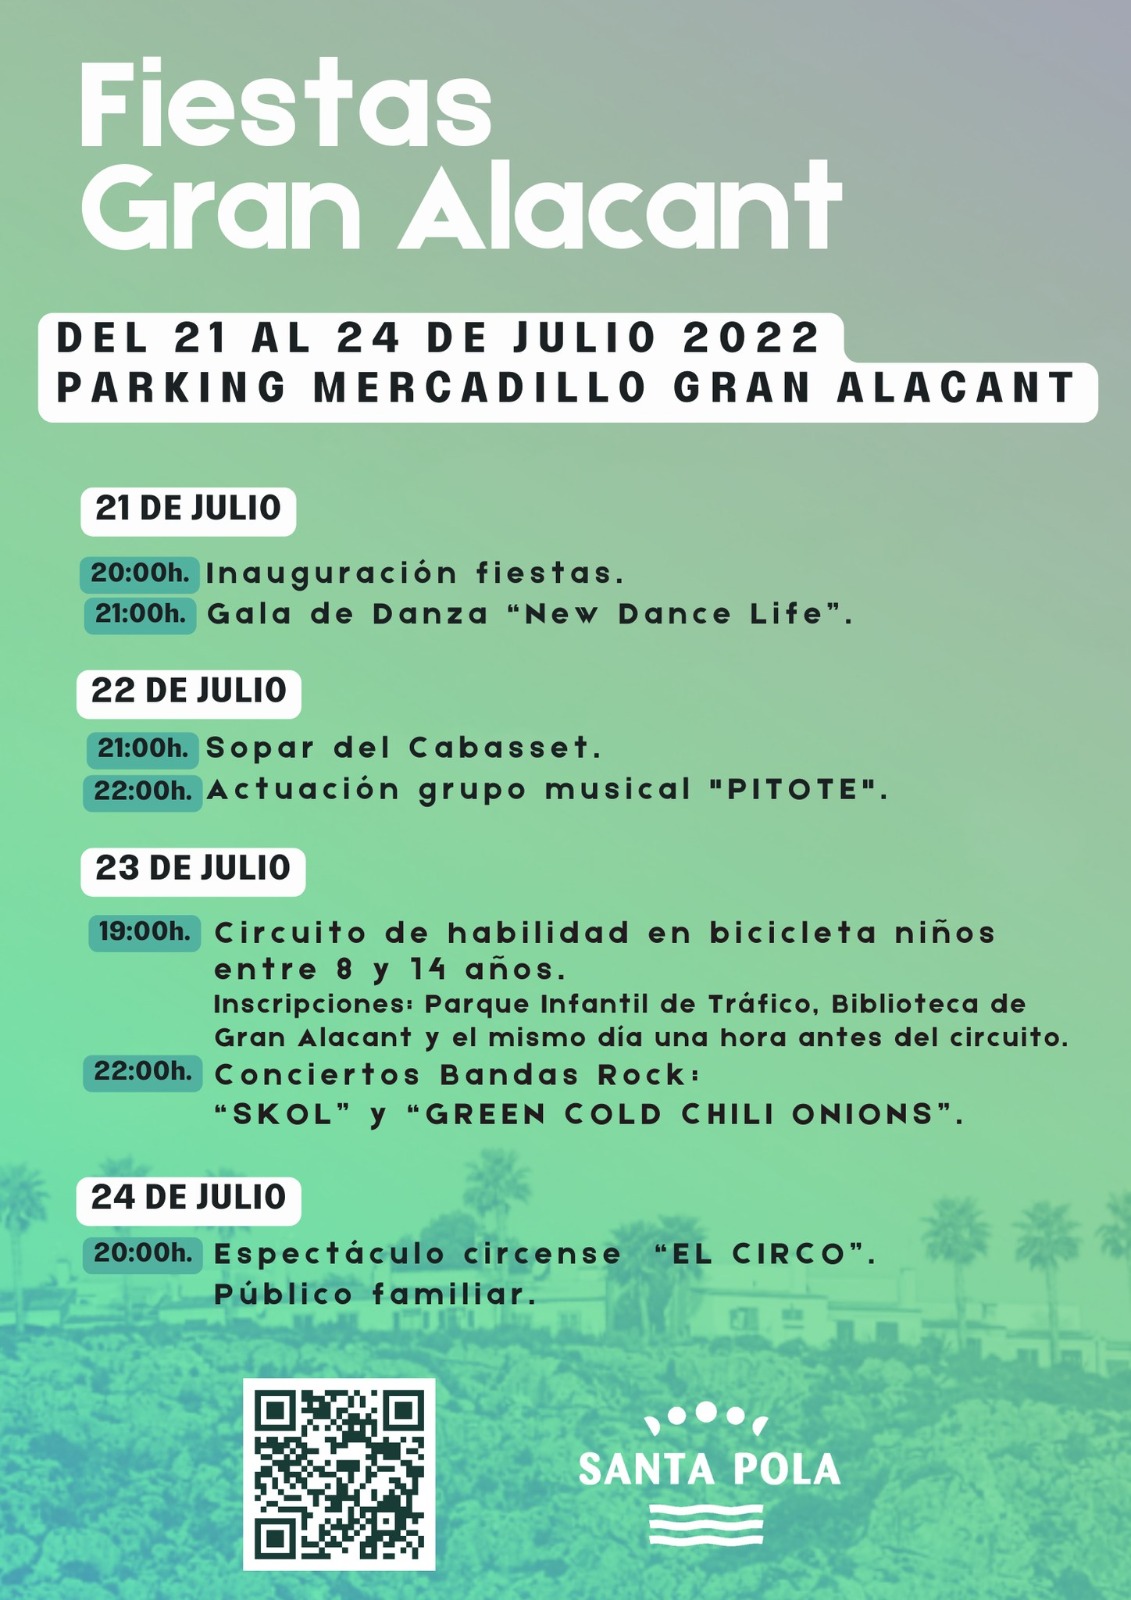 Fiestas Gran Alacant 2022